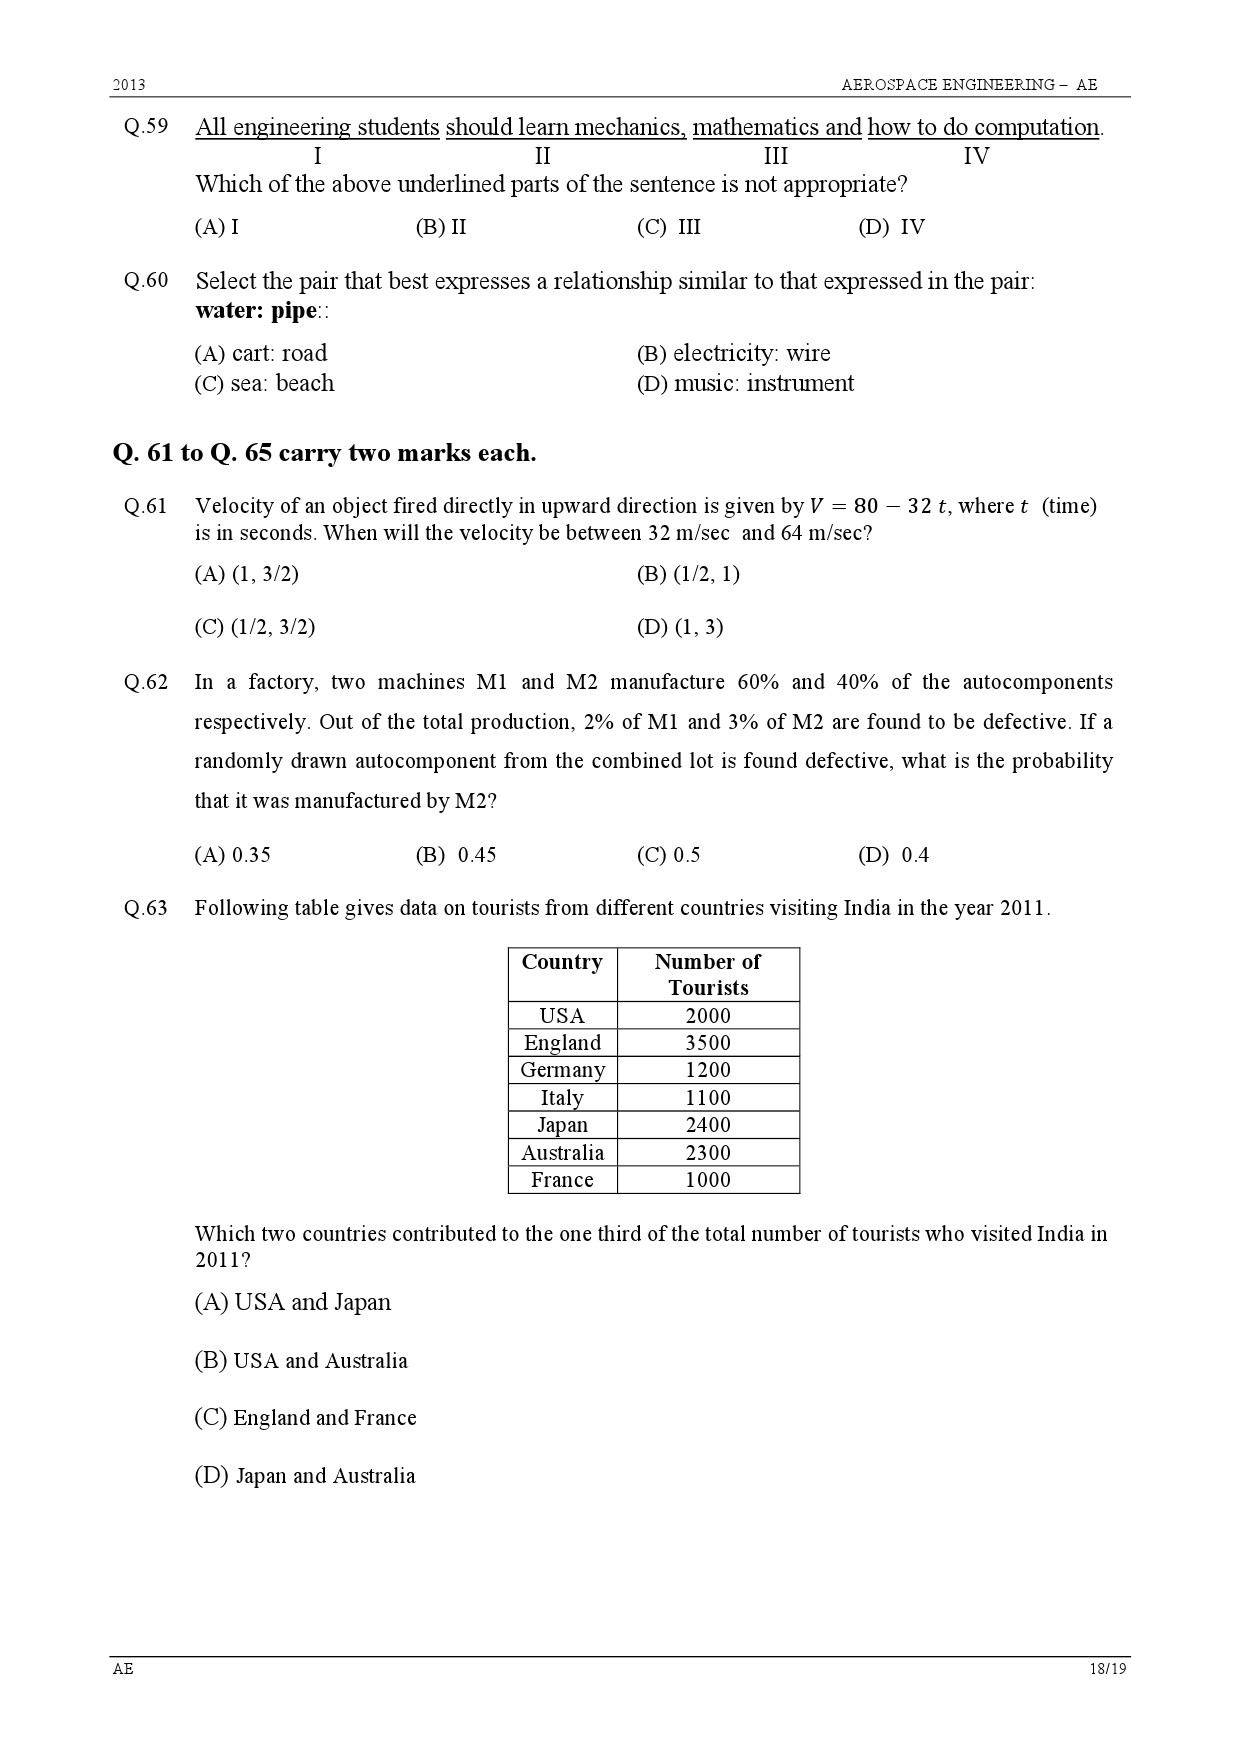 GATE Exam 2013 Aerospace Engineering Question Paper 18